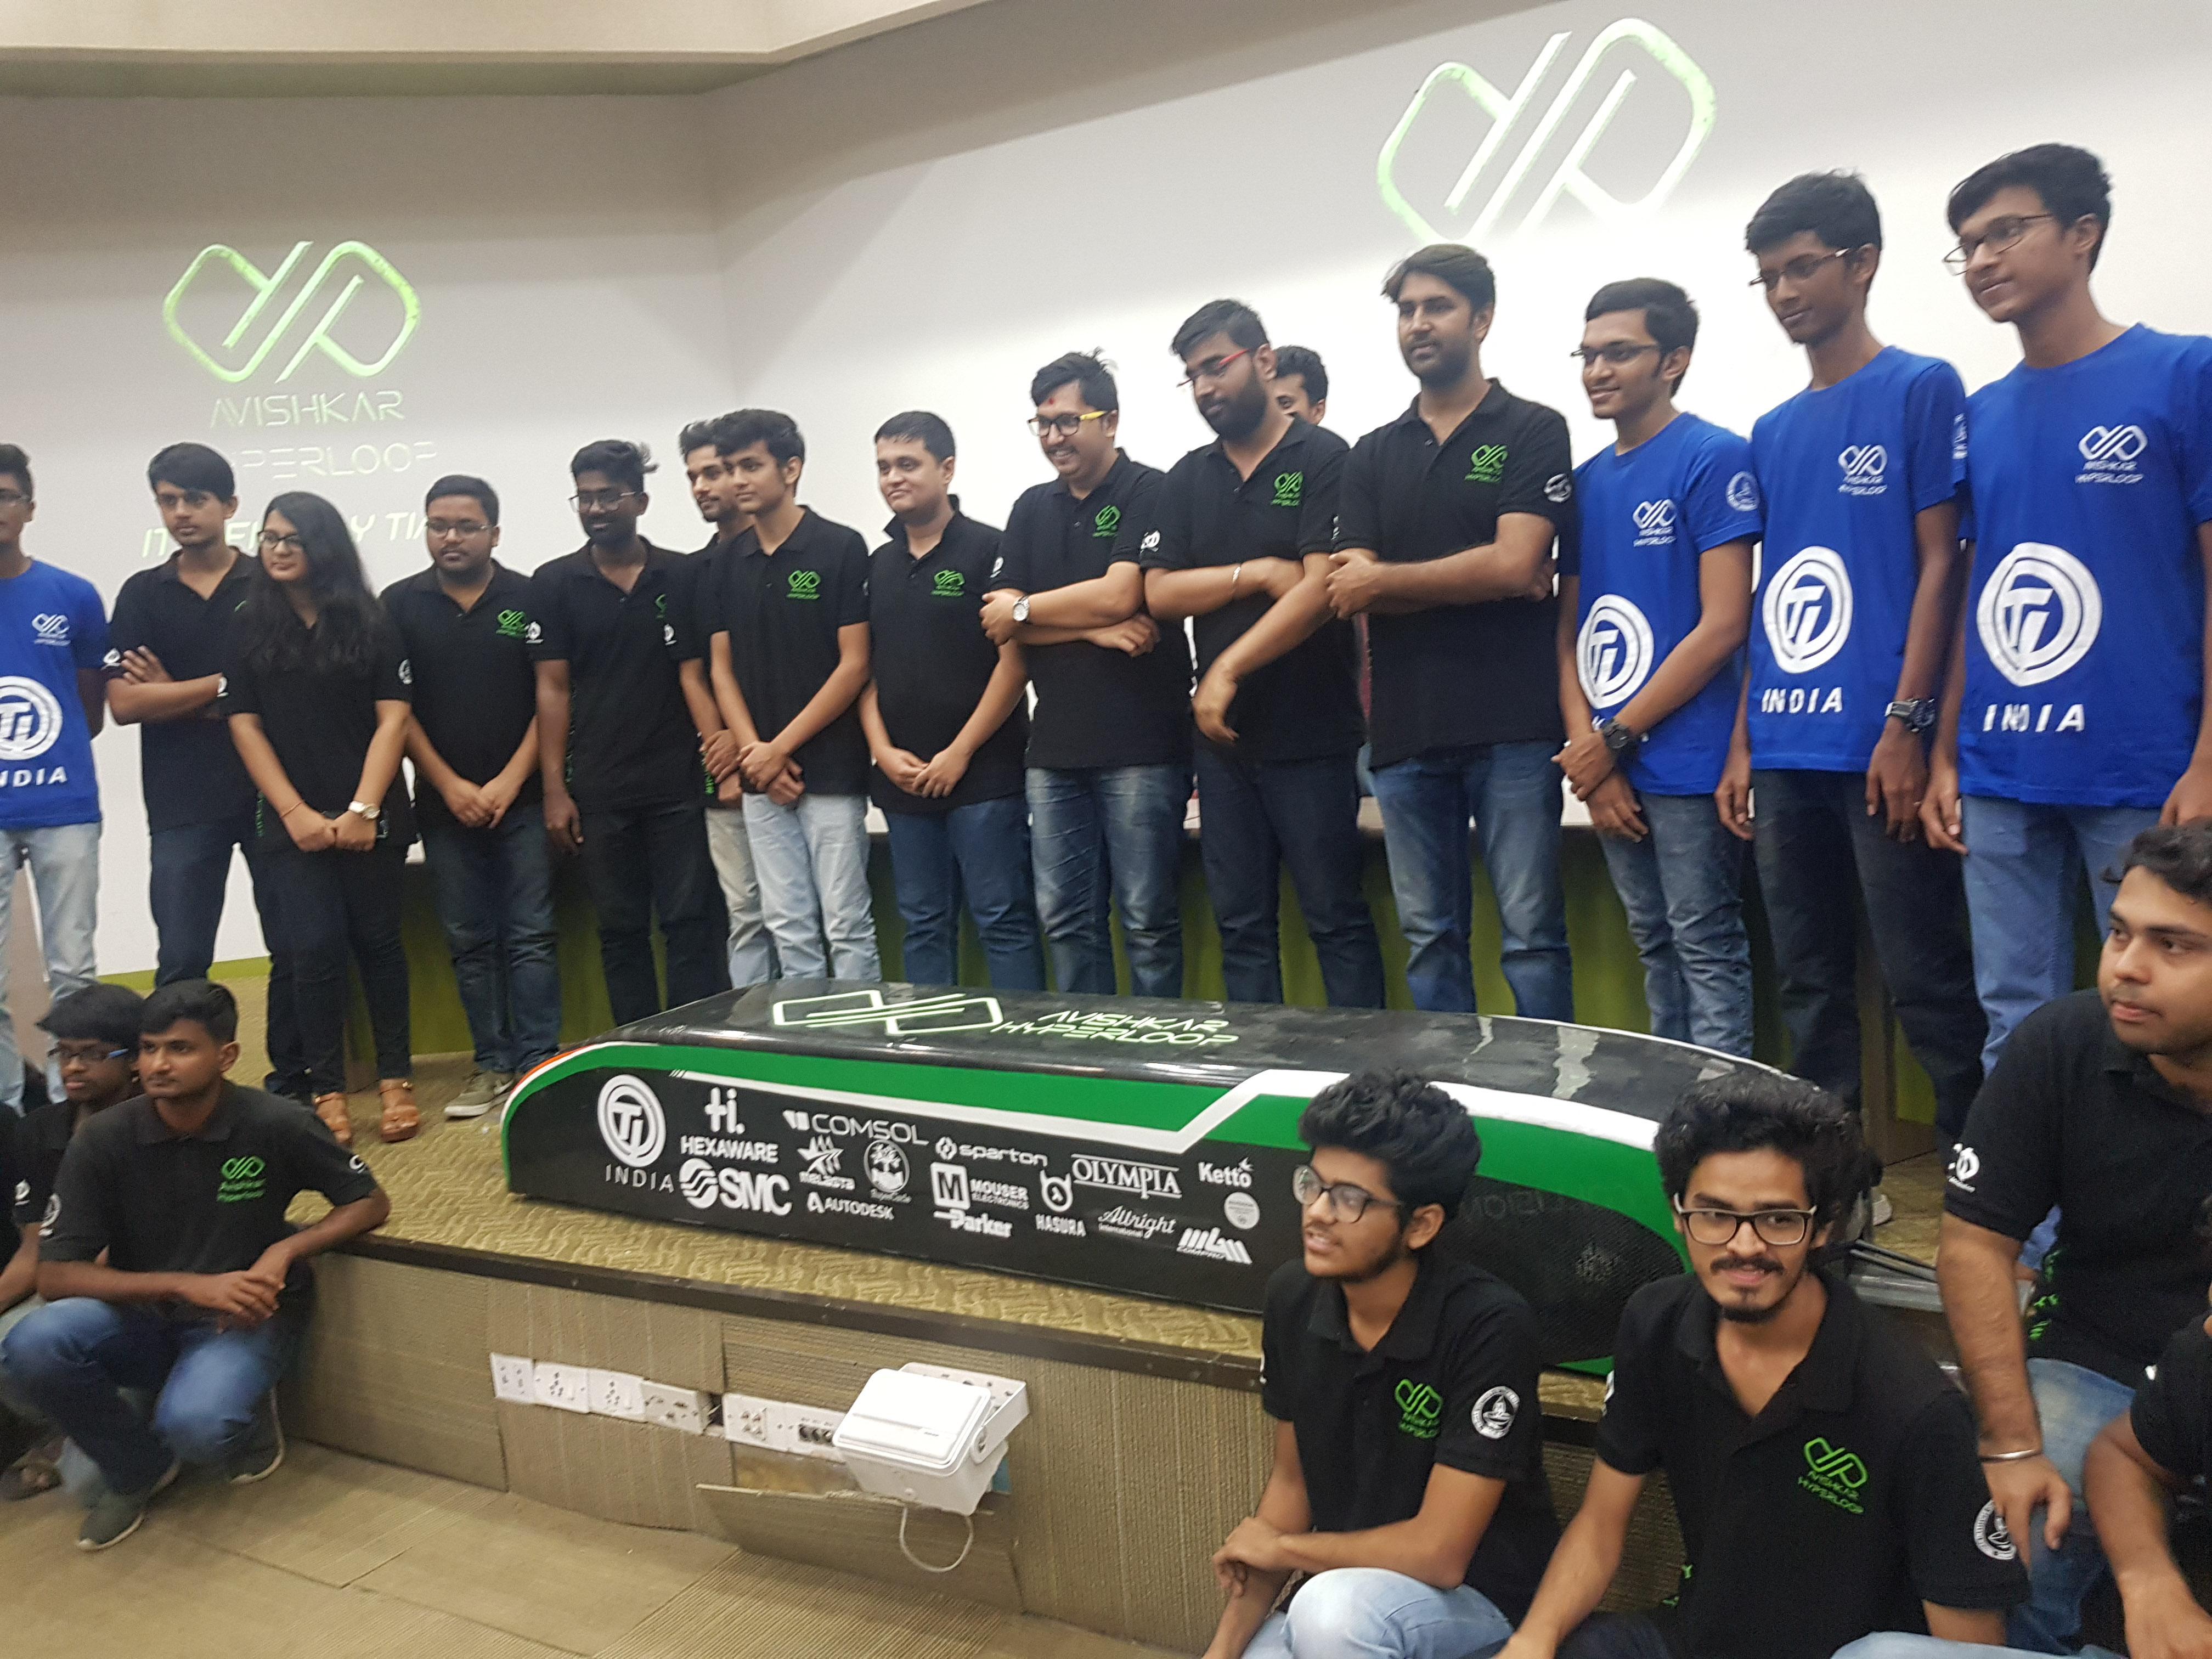 IIT Madras’ Avishkar Hyperloop Team with their Hyperloop Pod, which was unveiled on June 141, 2019. (Source: IIT Madras)